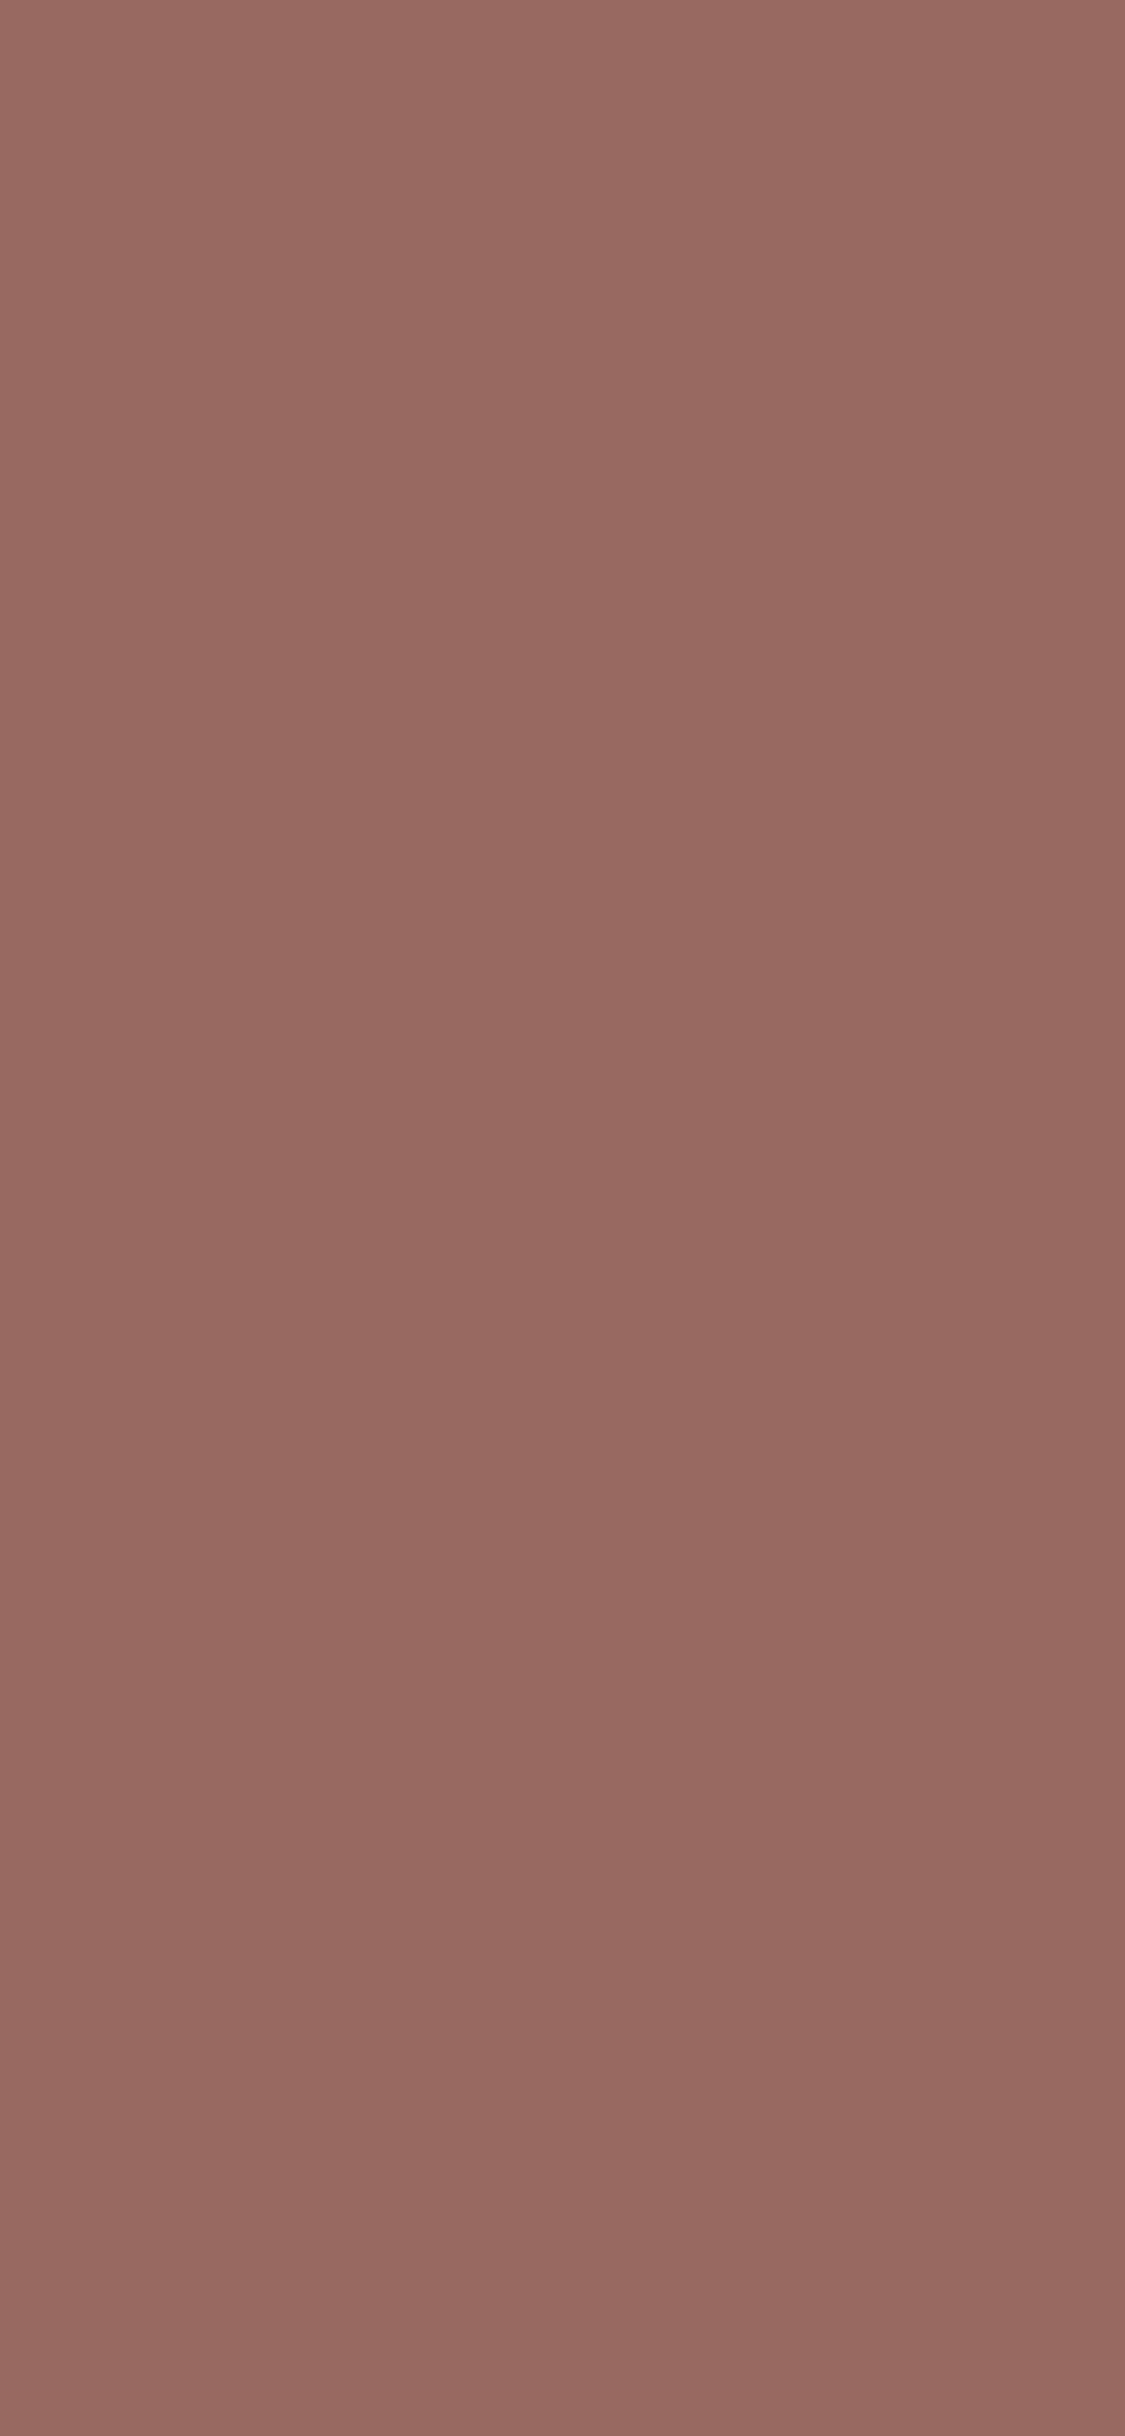 1125x2436 Dark Chestnut Solid Color Background